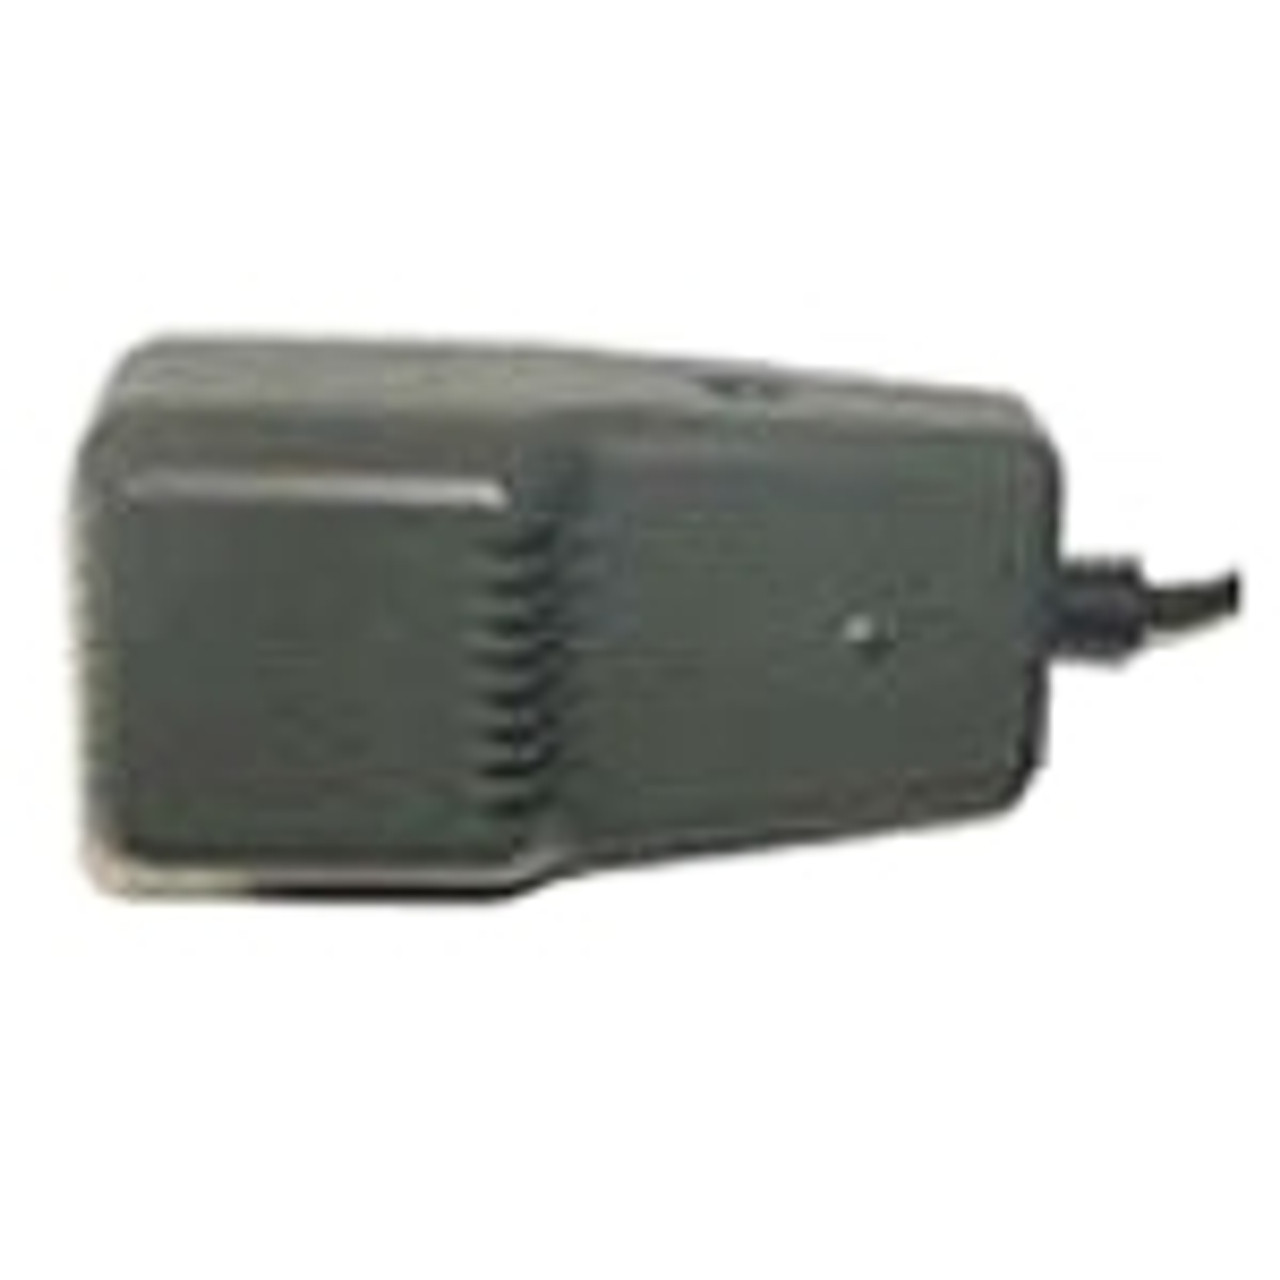 2200-16020-001 PolyCom 110vac Pwr / Telco Module For Soundstation2